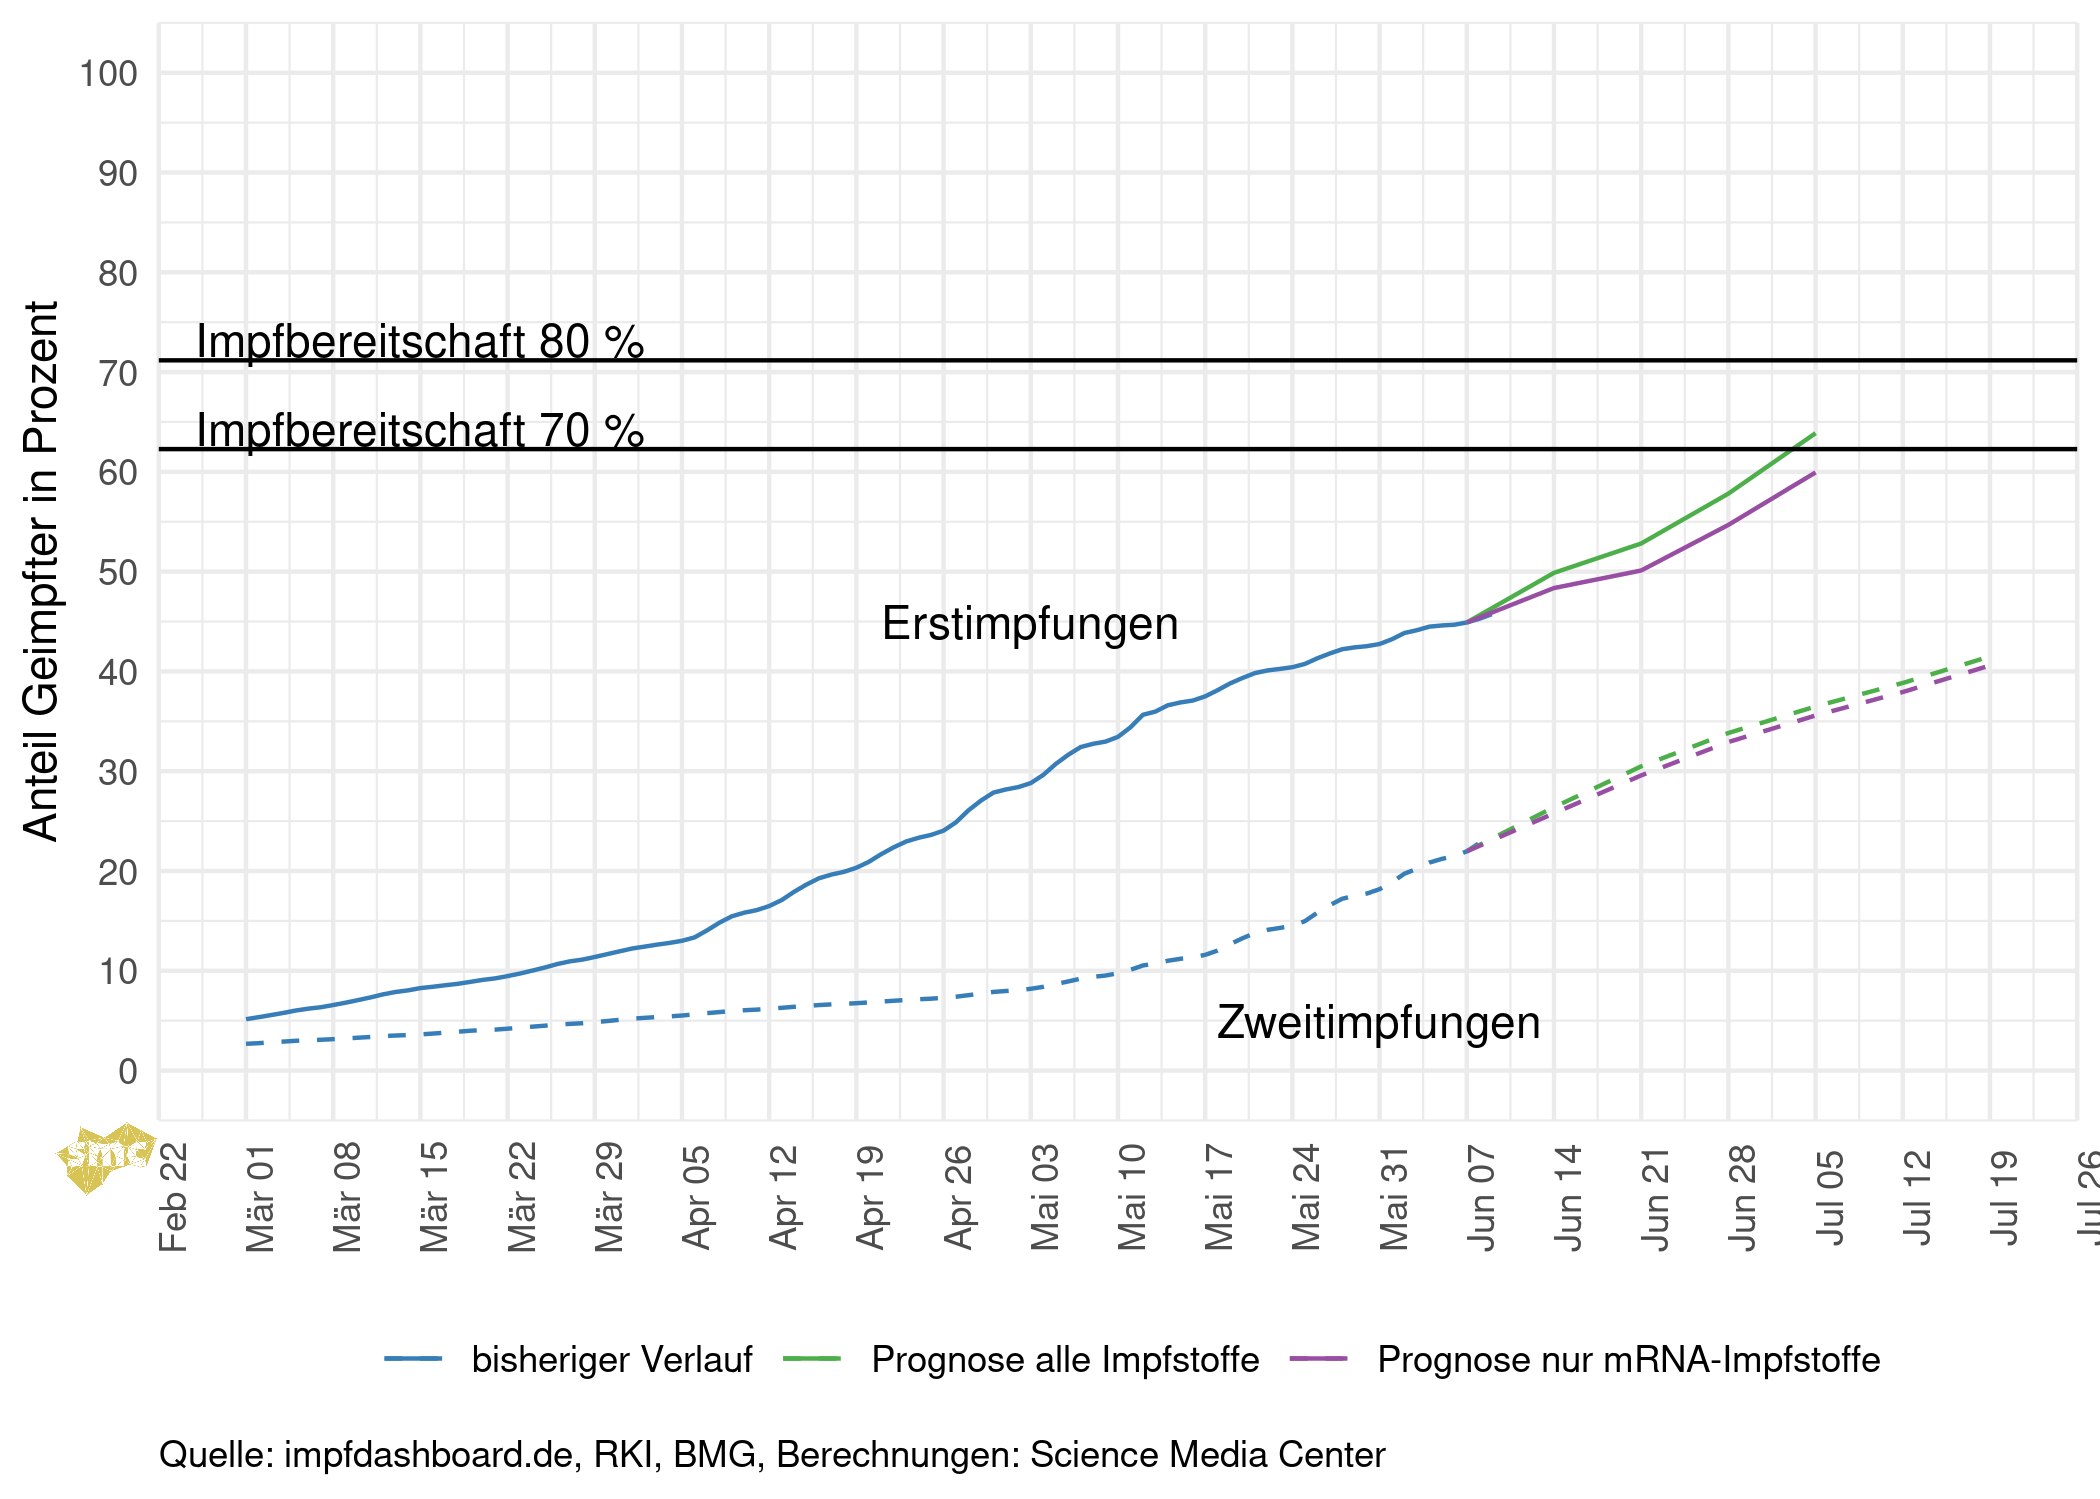 2021-06-10_Impfungen_Prognosen.png